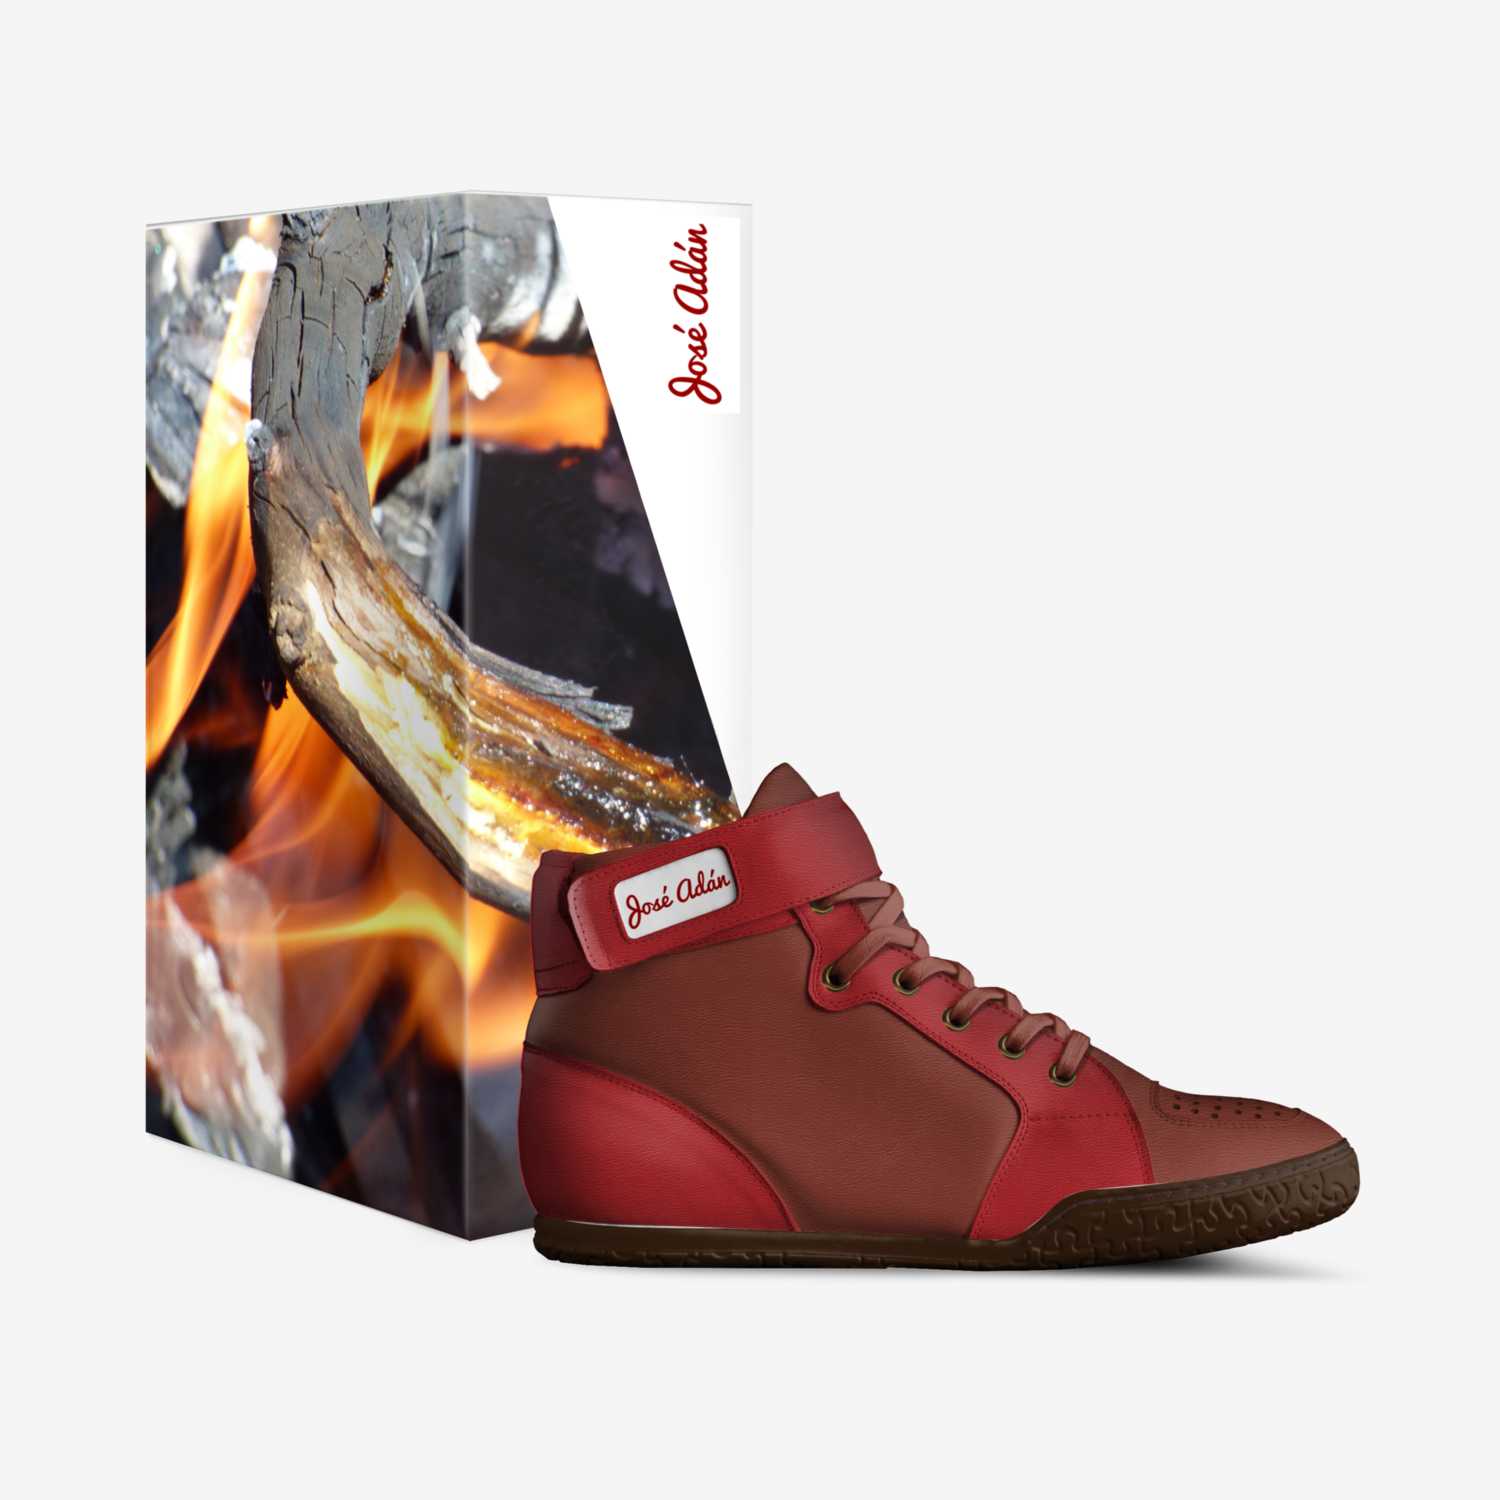 Jose Adan custom made in Italy shoes by Joseph Adams | Box view